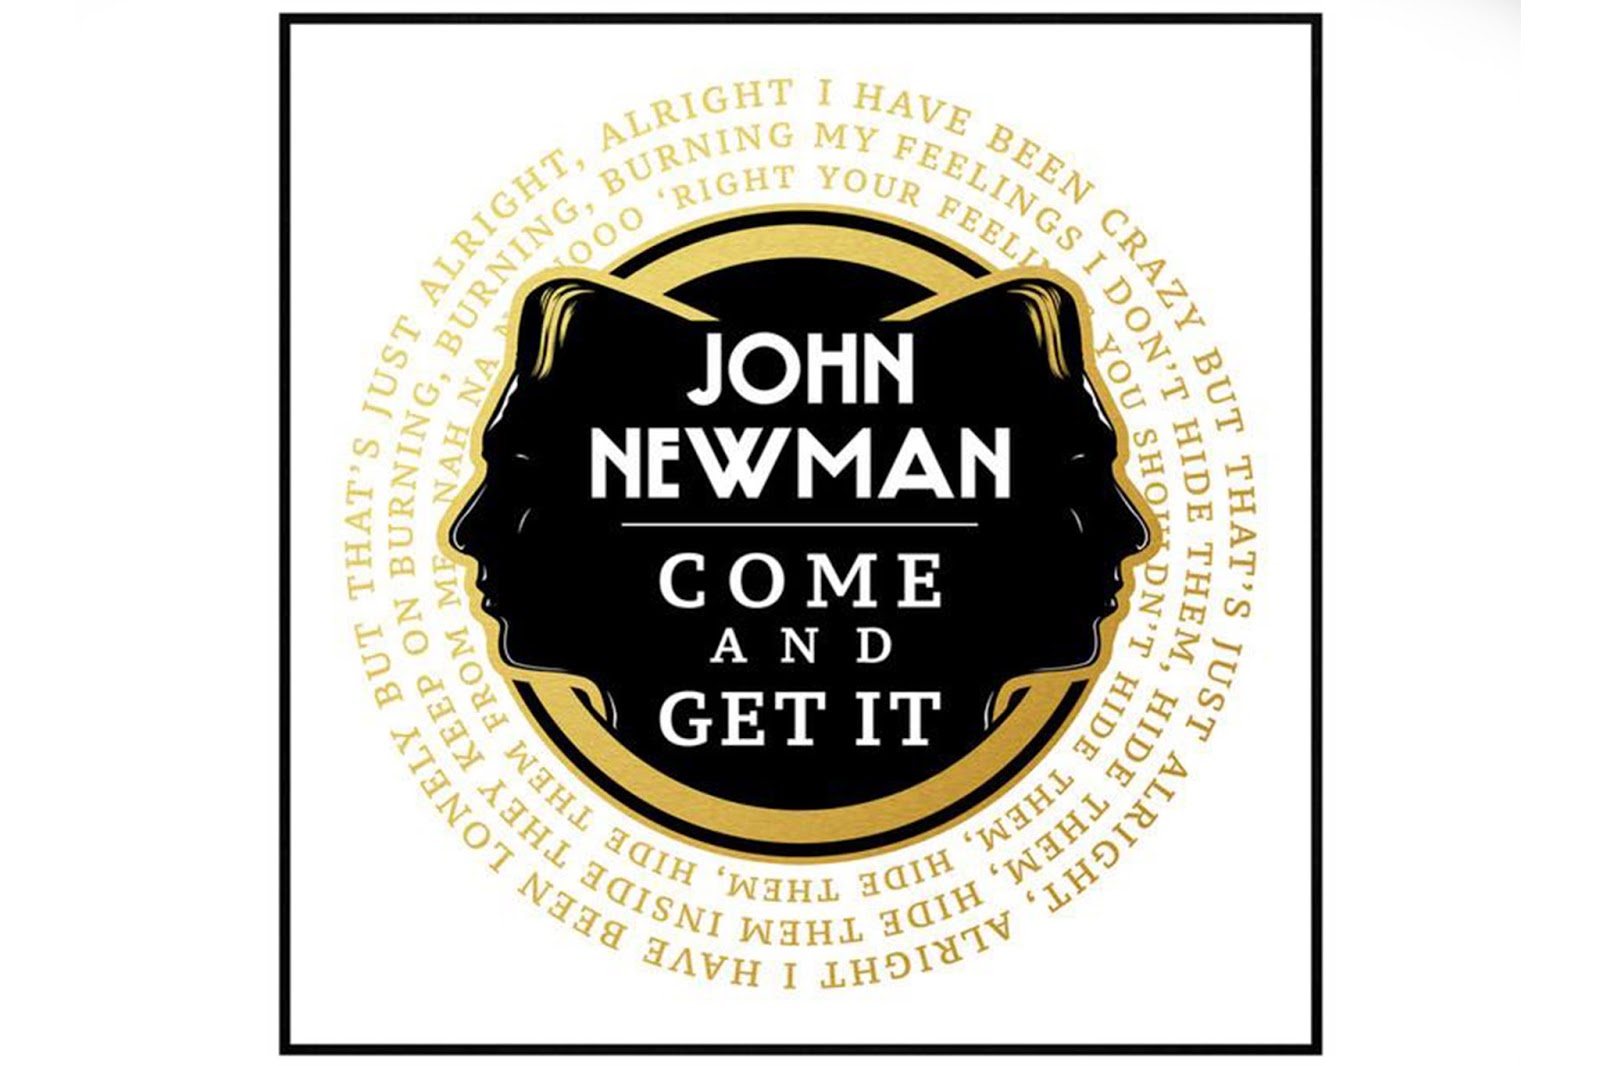 Get a new man. John Newman песни. John Newman топоры. John Newman Tribute. Come and get it.